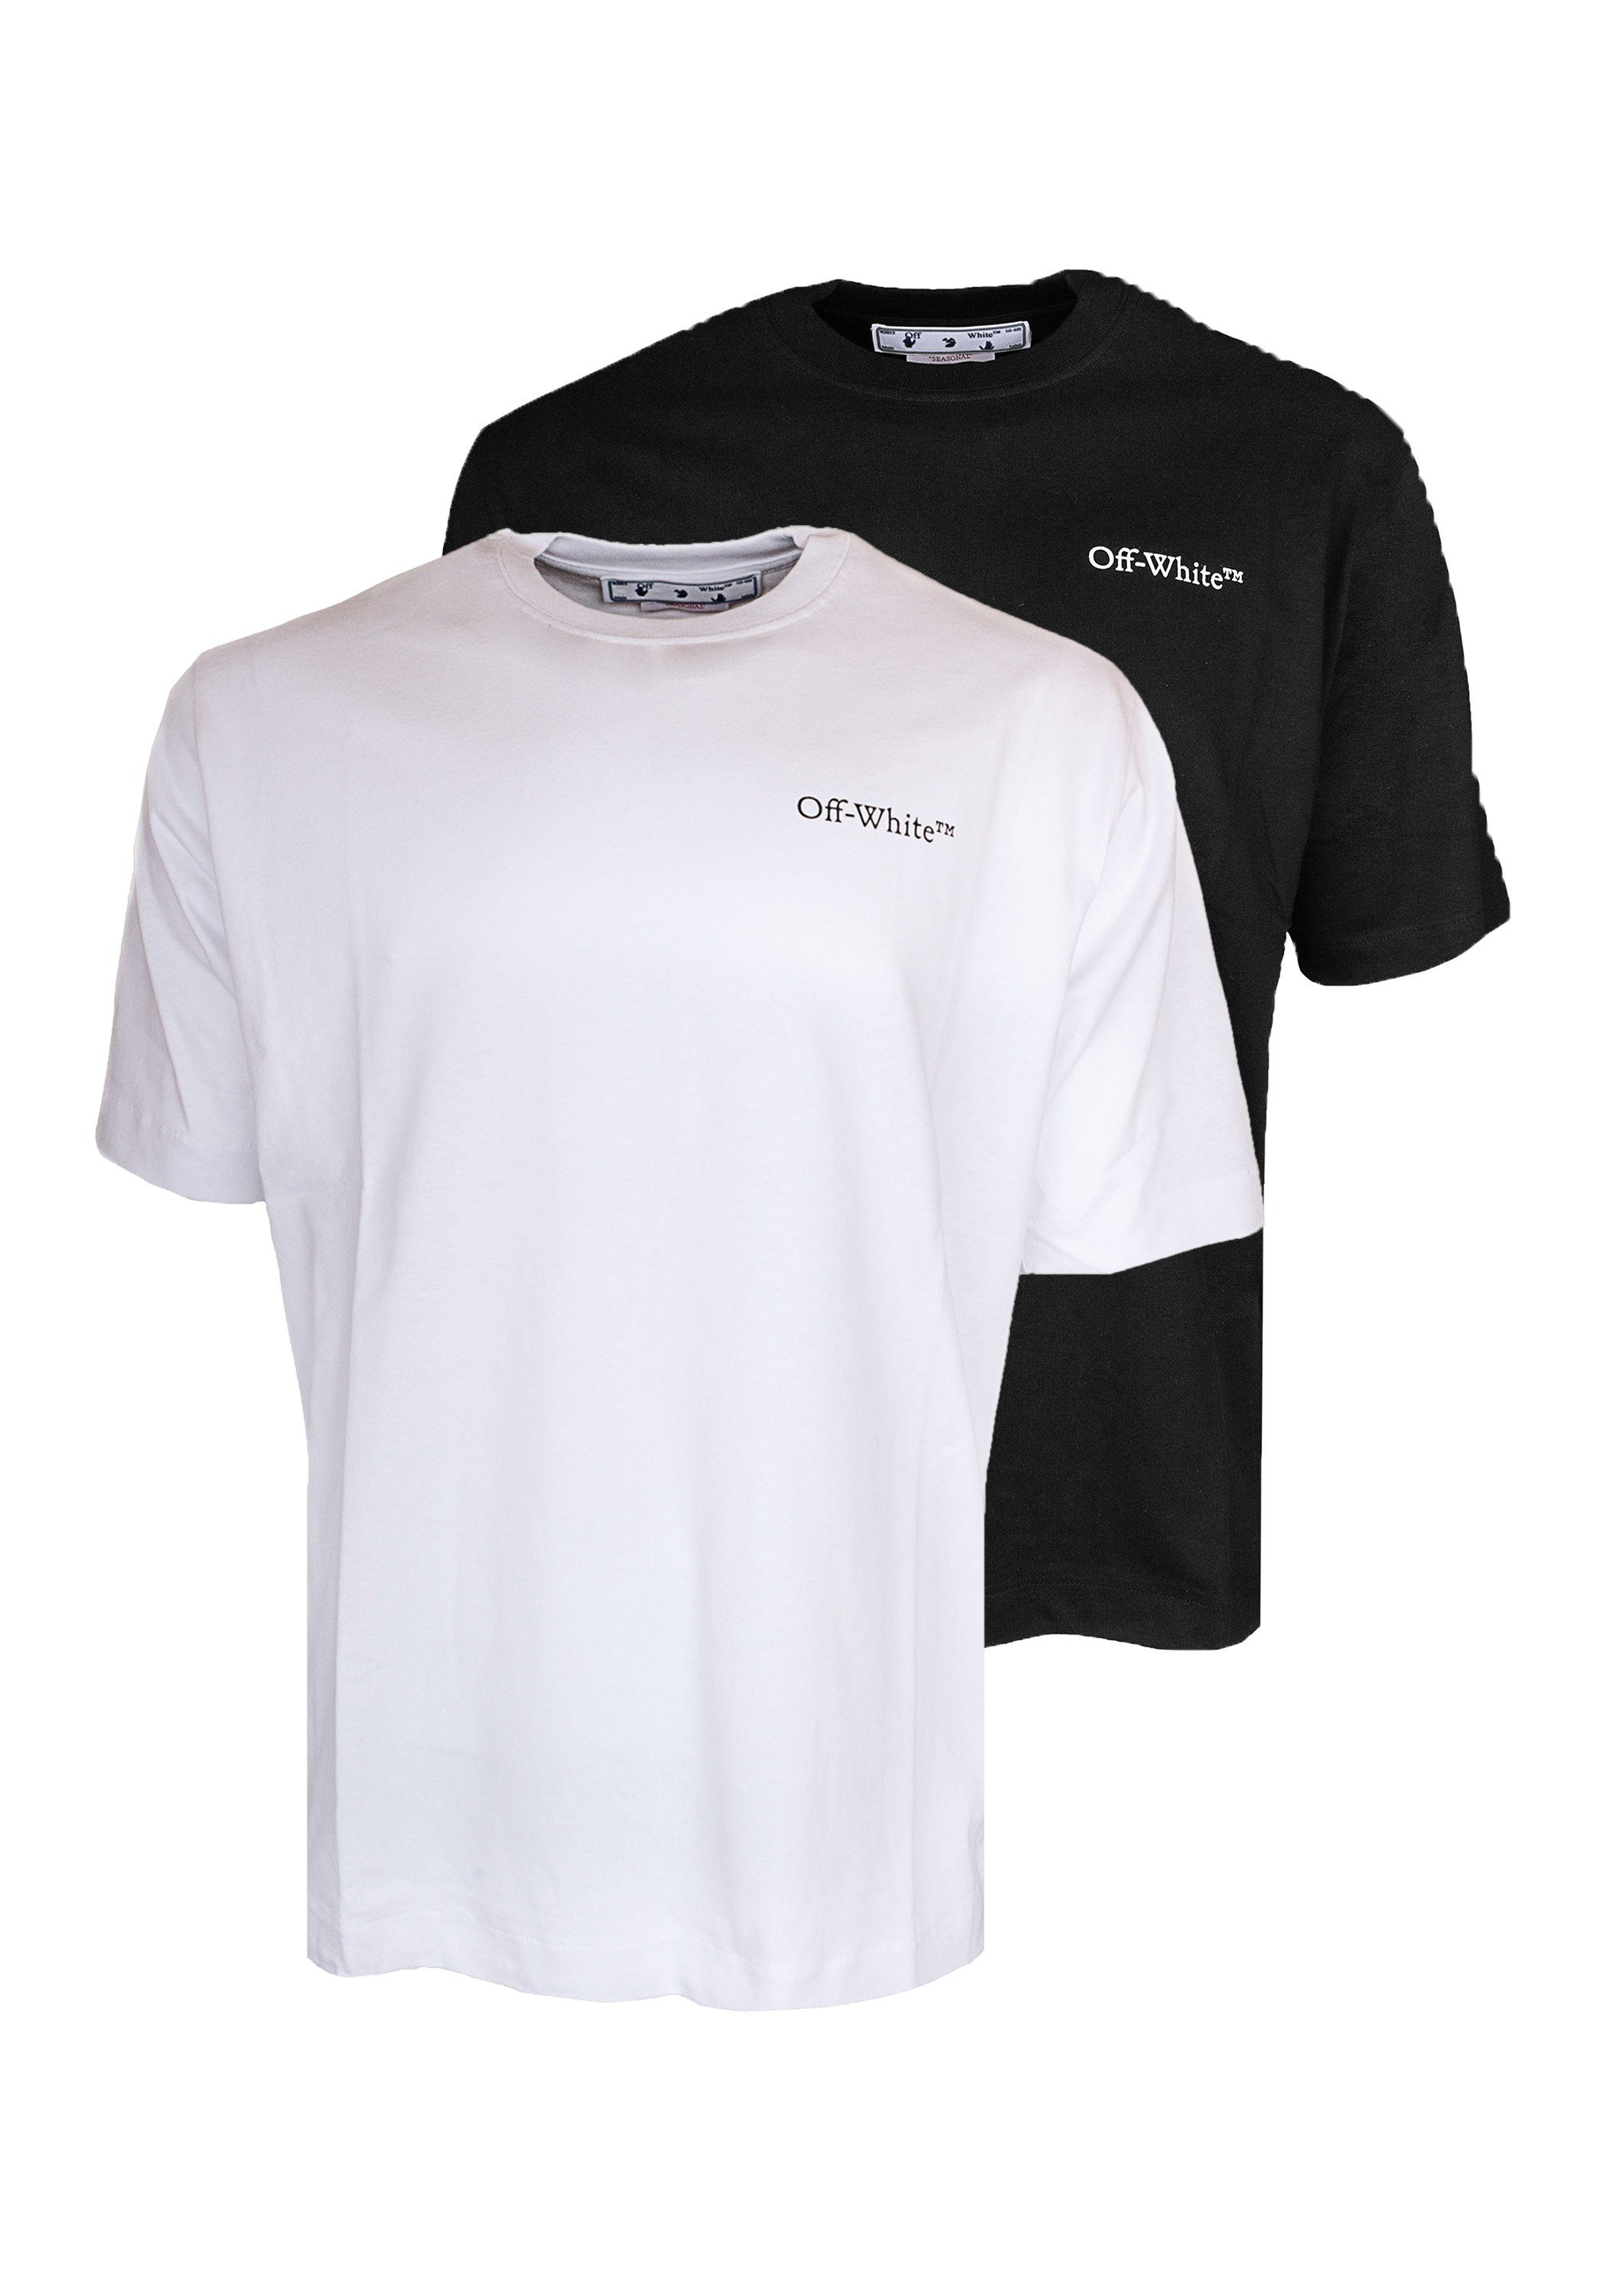 Black T-Shirt OFF-WHITE White Crowning Herren Off T-Shirt Shirt Caravaggio